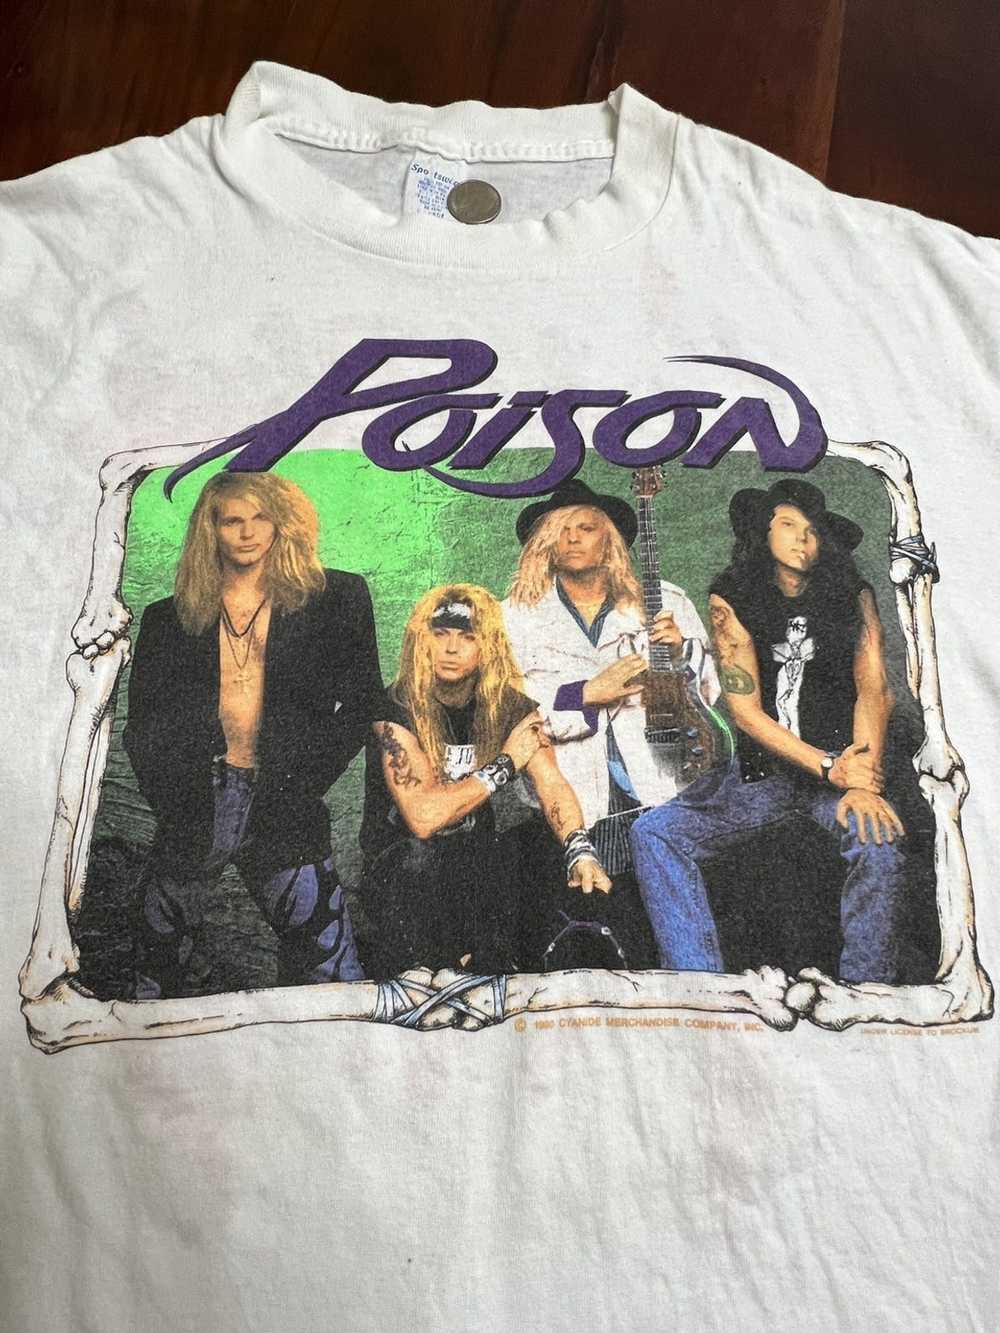 Vintage 1990 Poison Flesh and Blood tour shirt - image 3